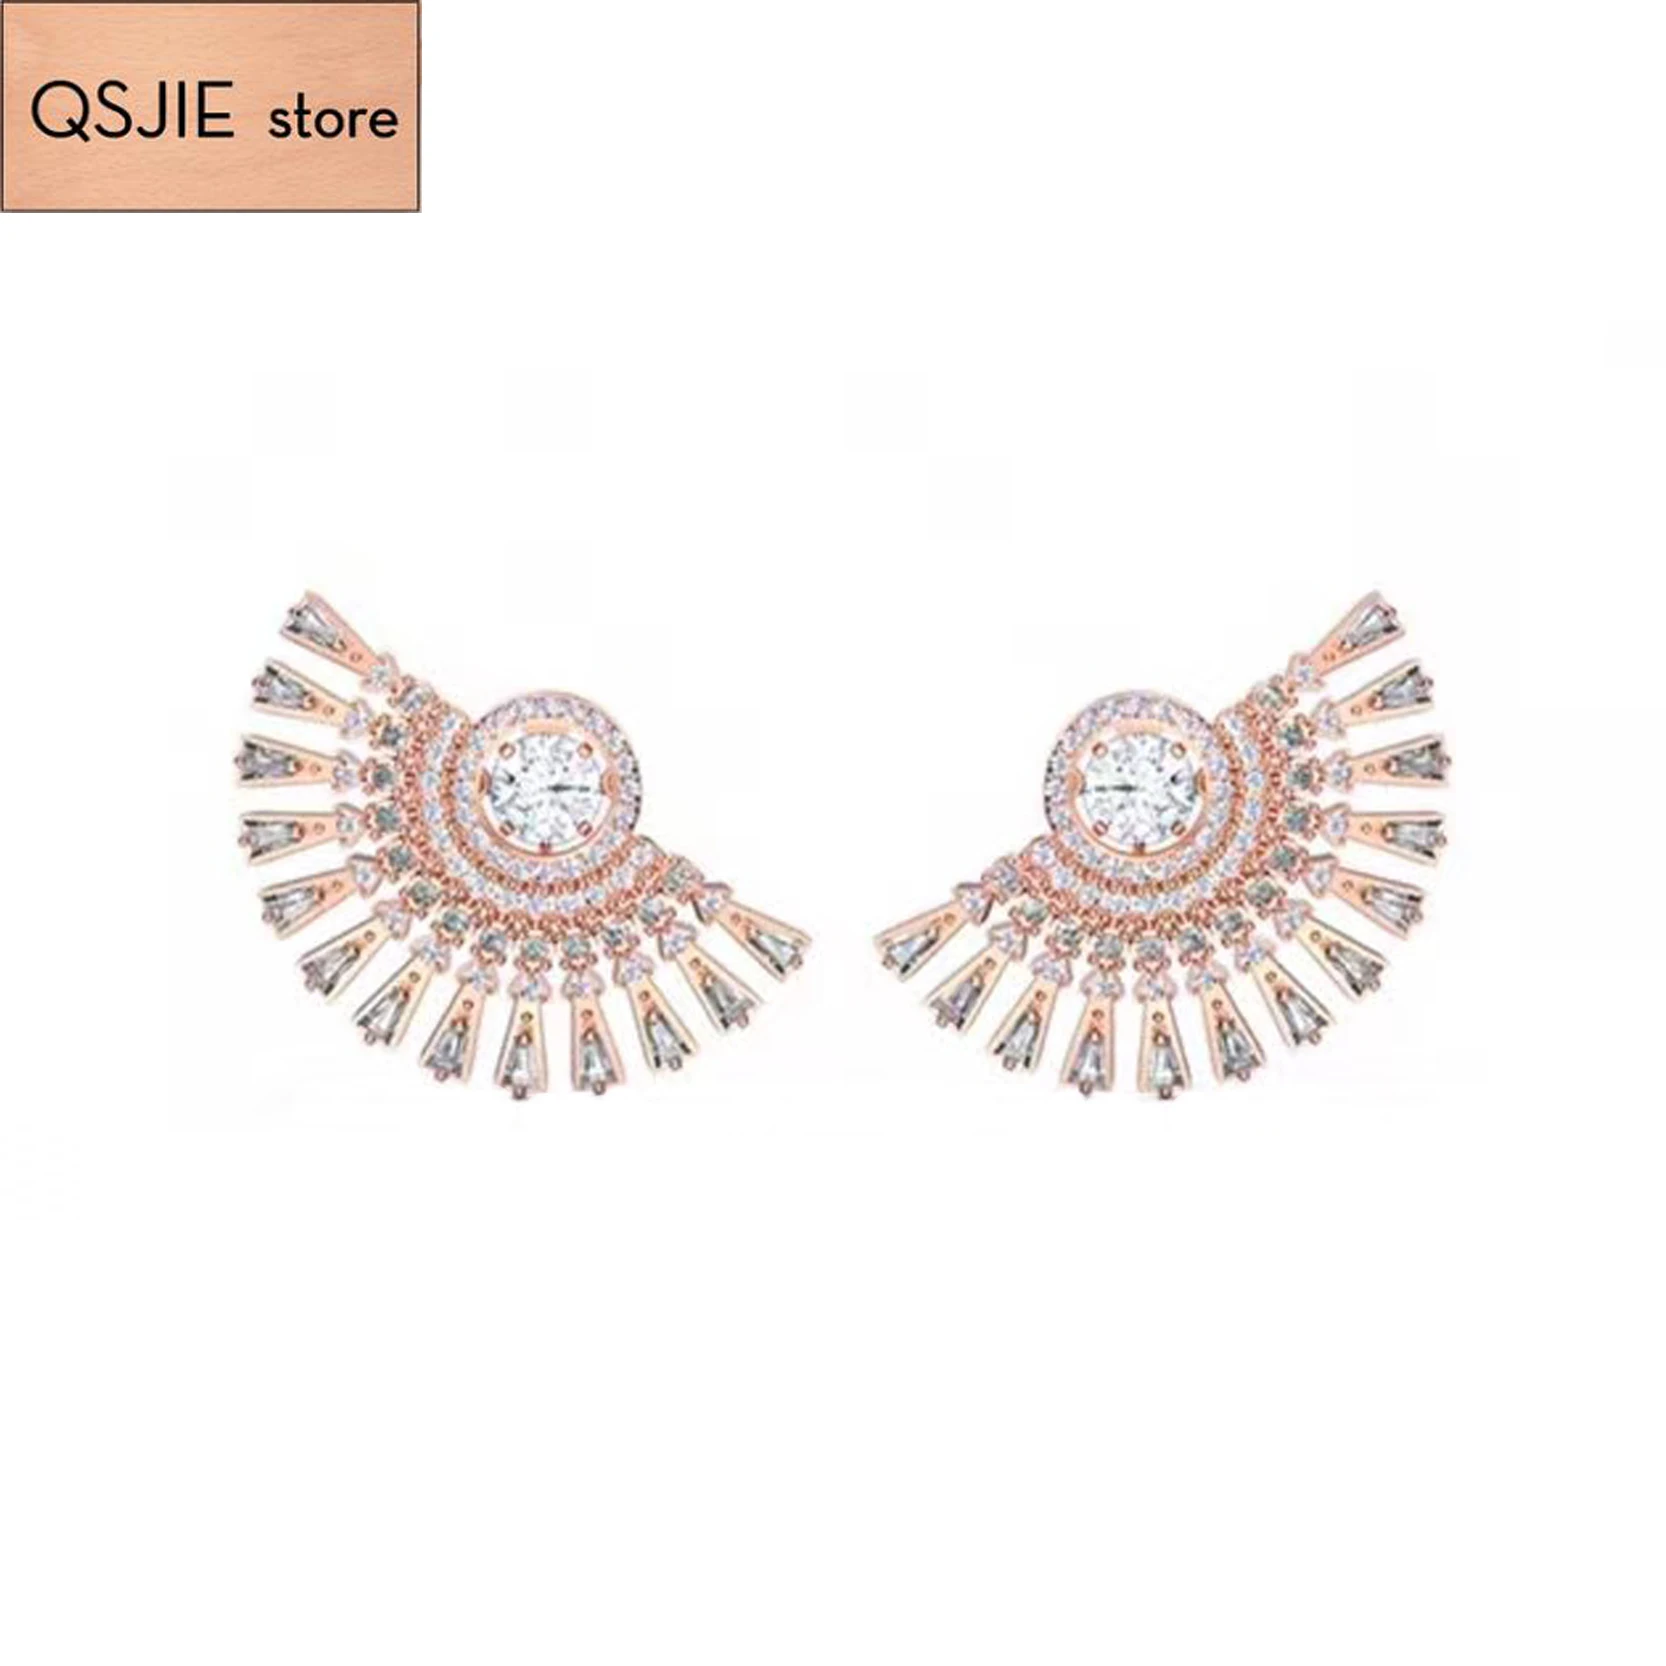 

QSJIE High quality swa2020 new earrings, flashing heart, fan-shaped exaggerated lady earrings Glamorous fashion jewelry